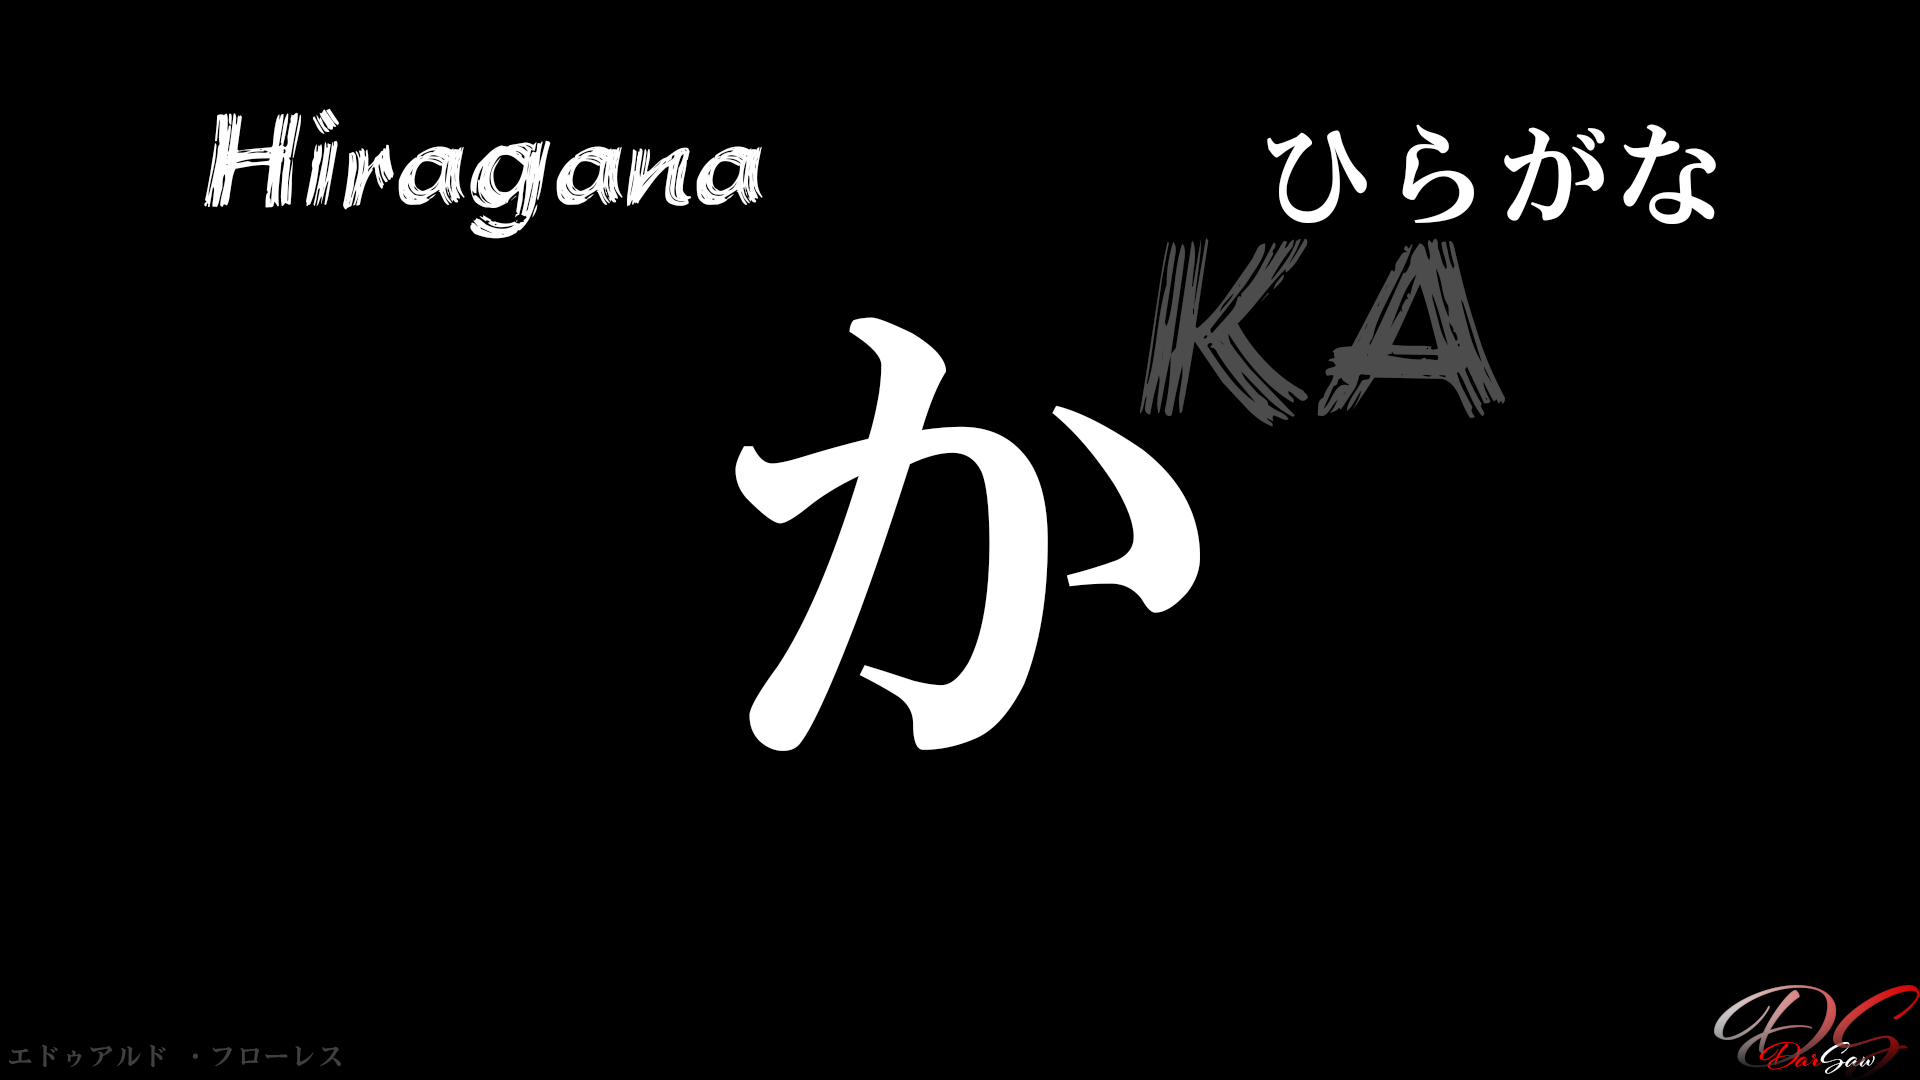 General 1920x1080 hiragana typography